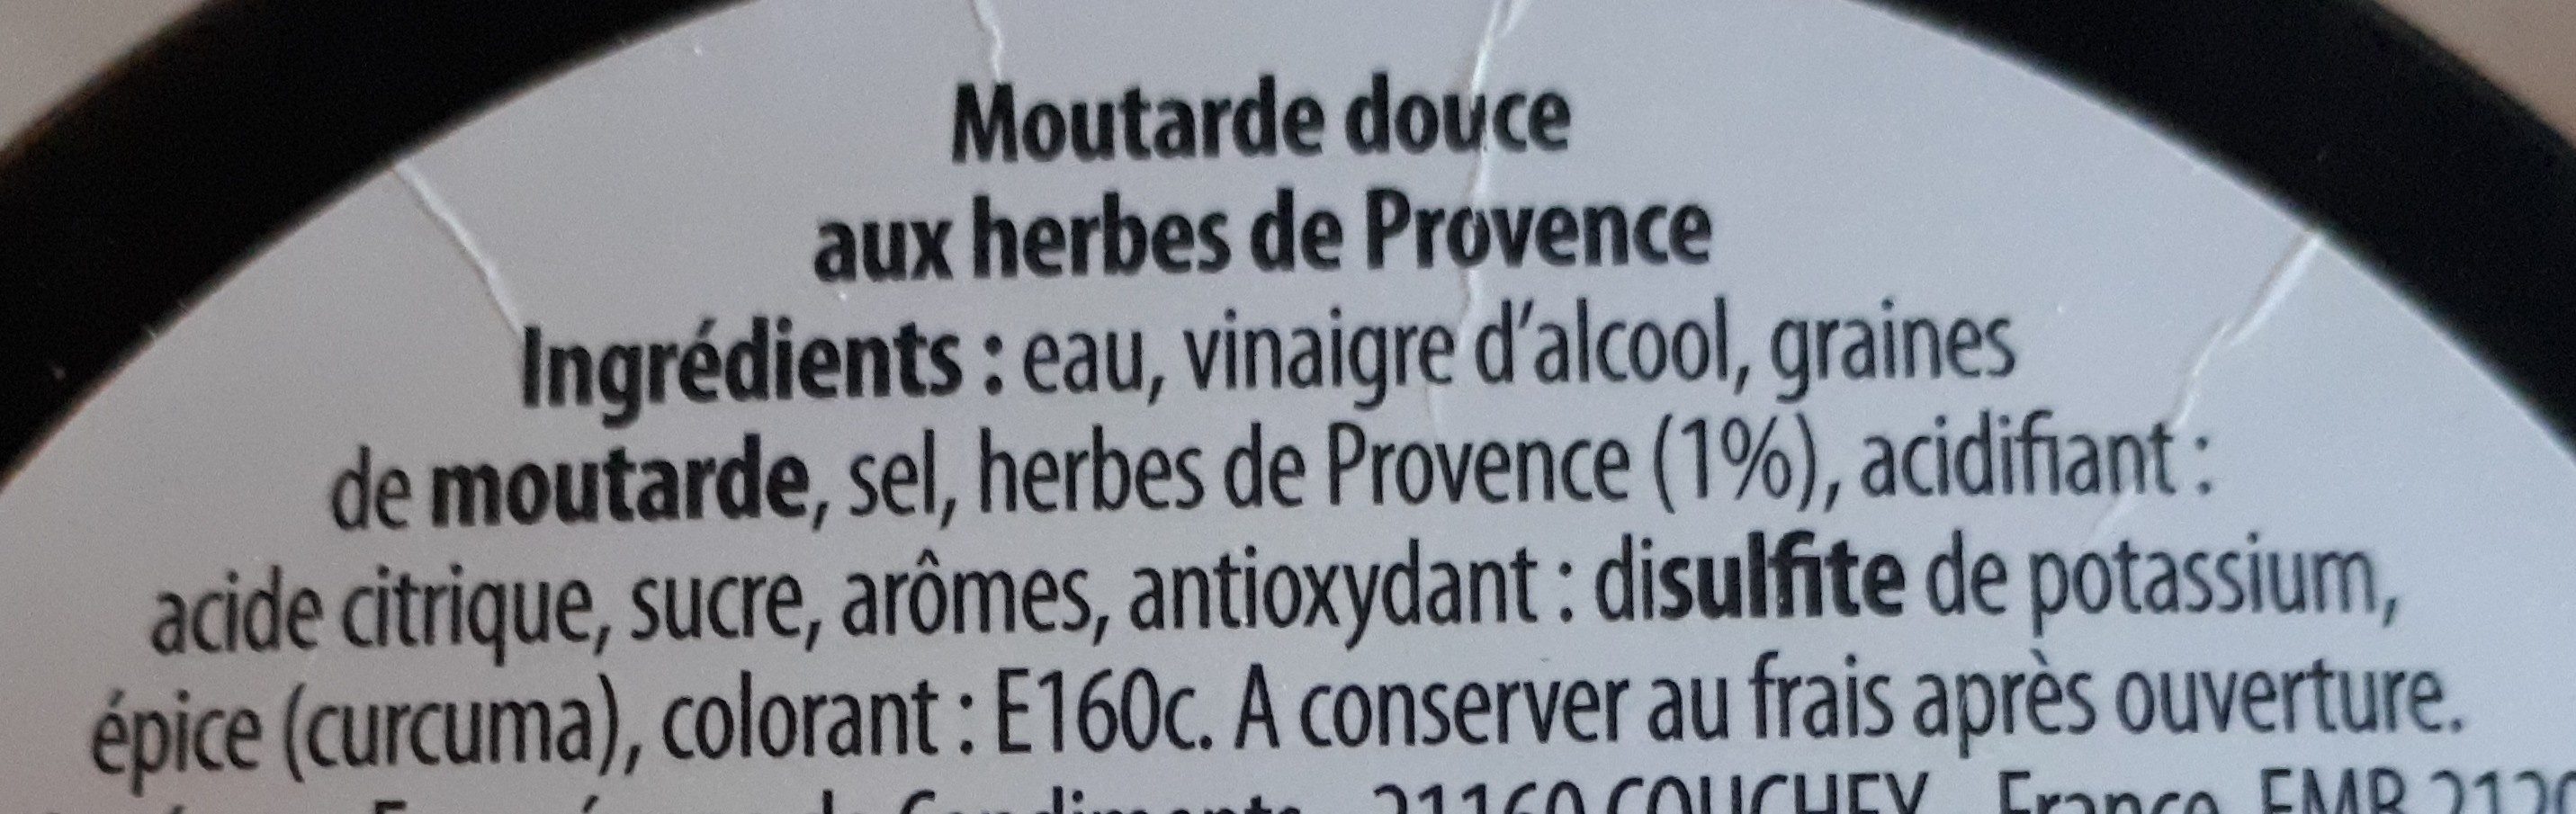 Moutarde aux herbes de Provence - Zutaten - fr